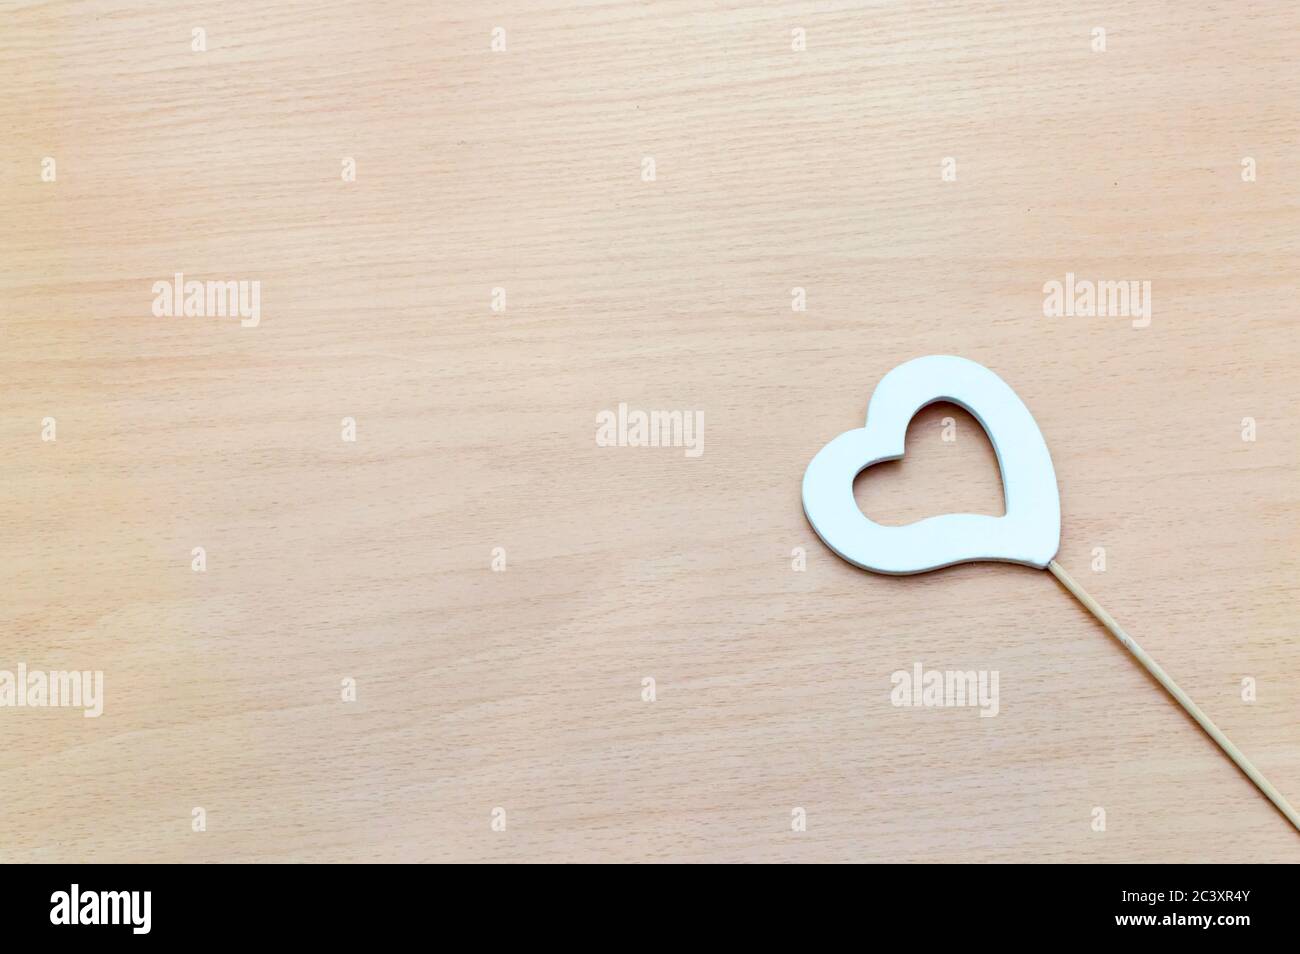 Heart shape symbol on wooden background. Stock Photo